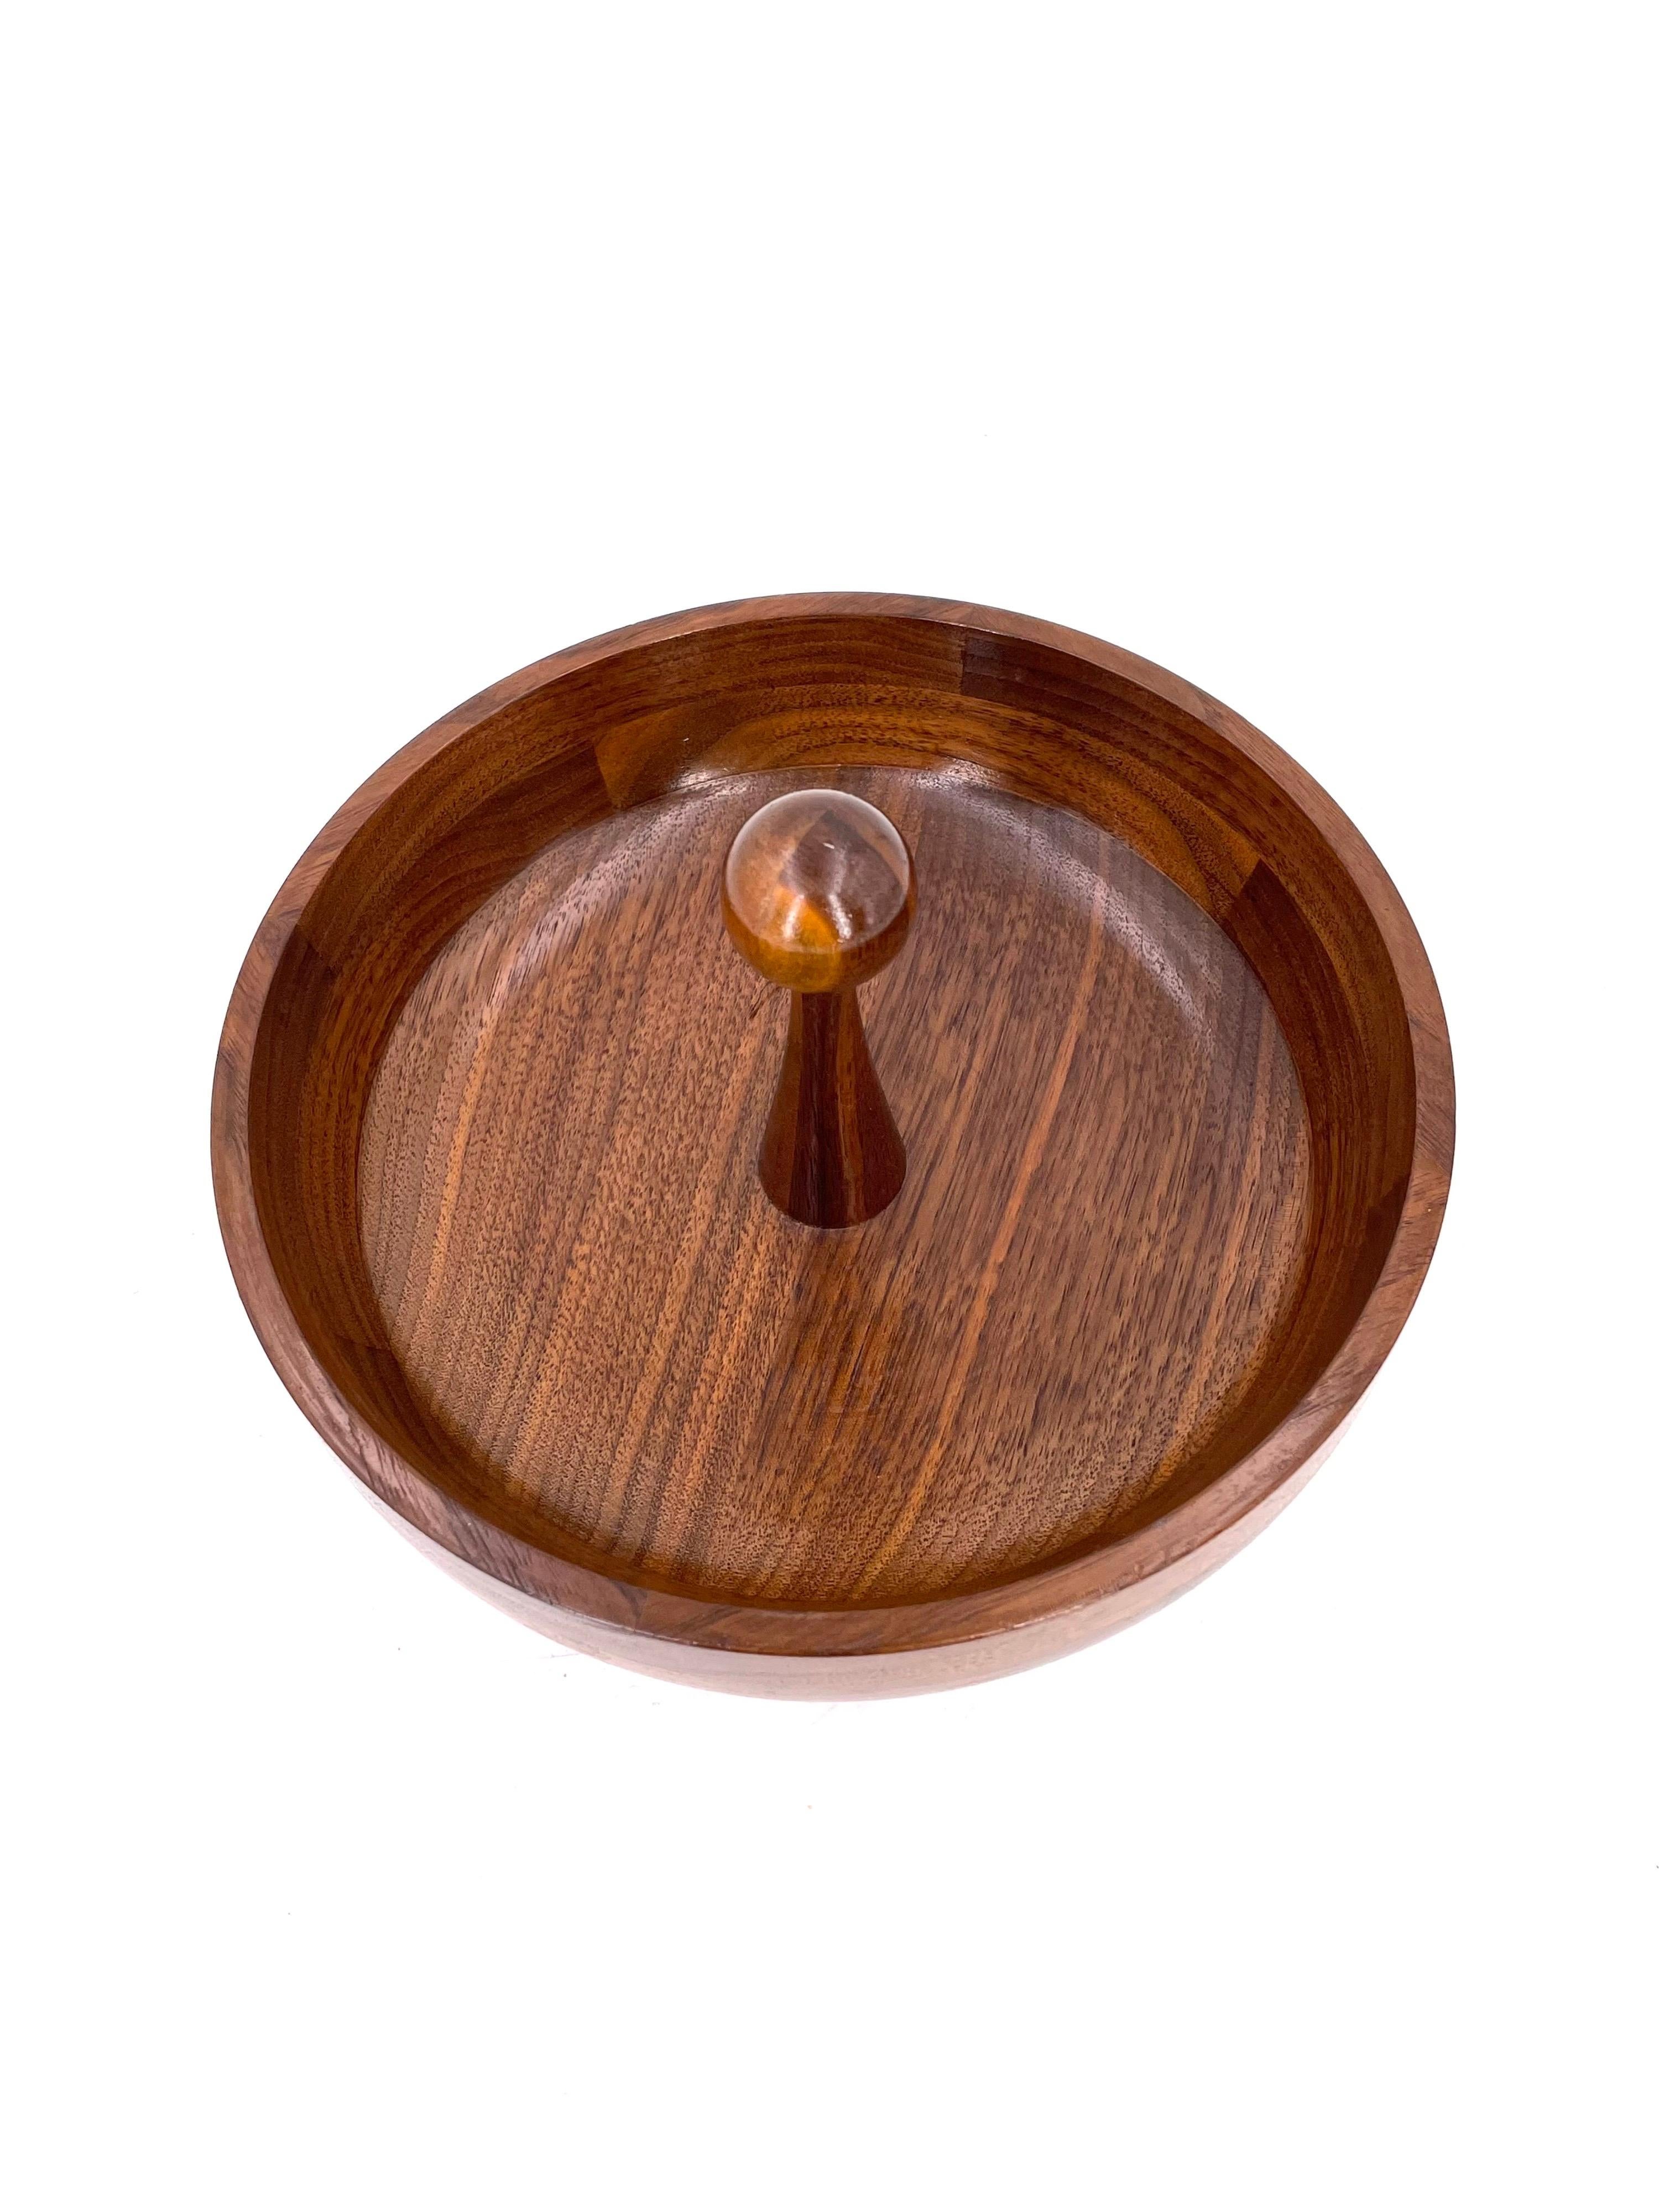 Mid-Century Modern Danish Modern Hand-Carved Solid Walnut Nut Bowl Catch It All